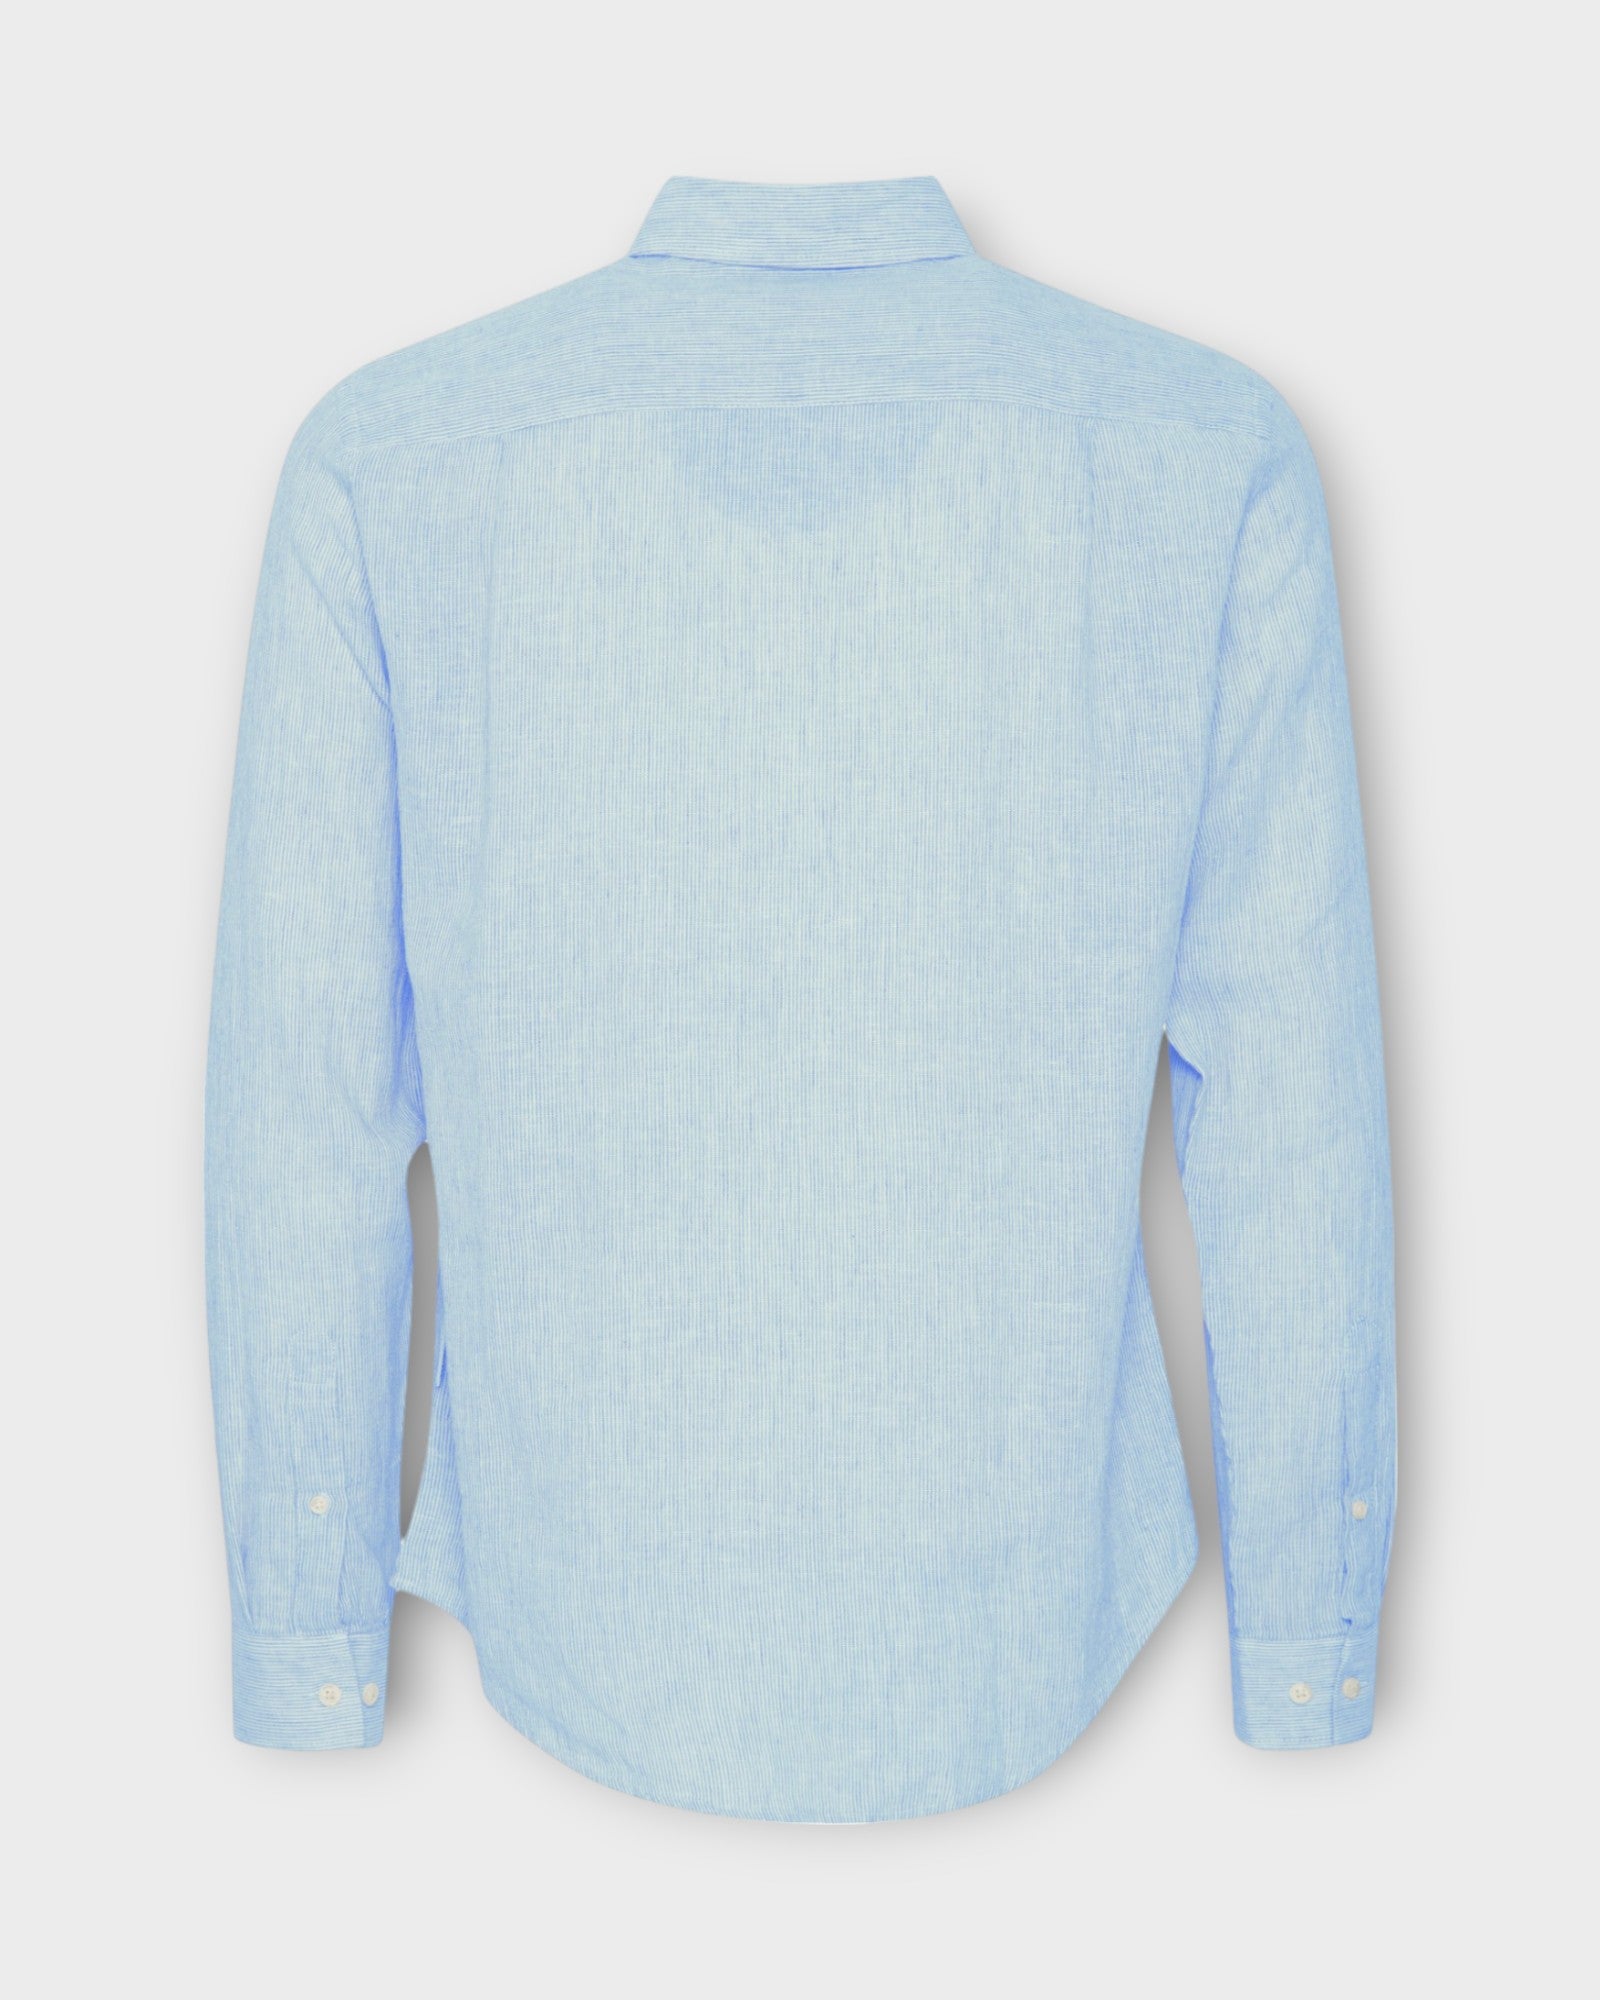 Anton Ls Striped Linen Mix Shirt  Chambray Blue, langærmet hørskjorte fra Casual Friday. Her set bagfra.